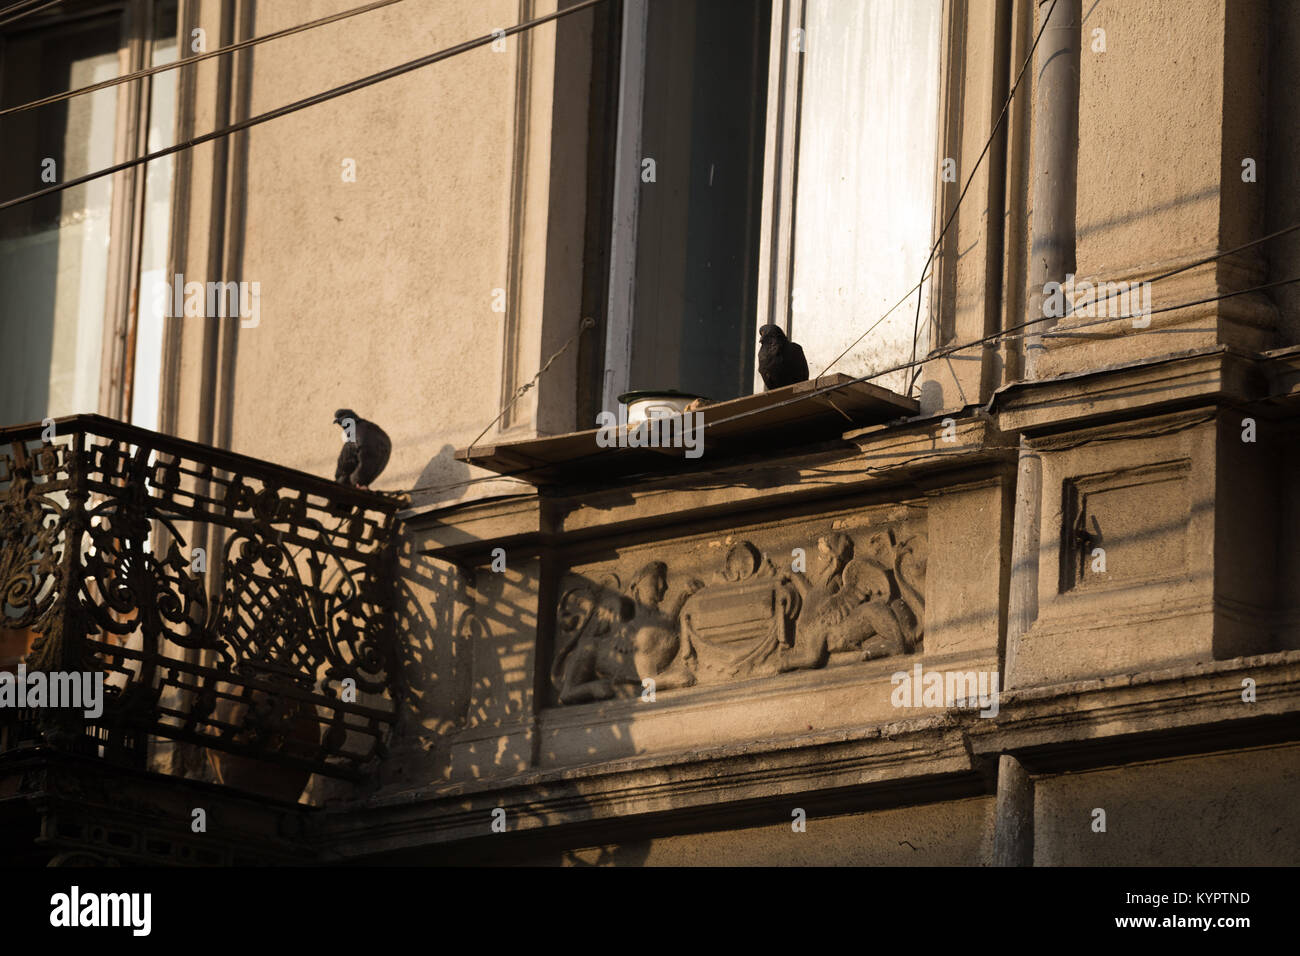 Pigeons on a ledge Stock Photo